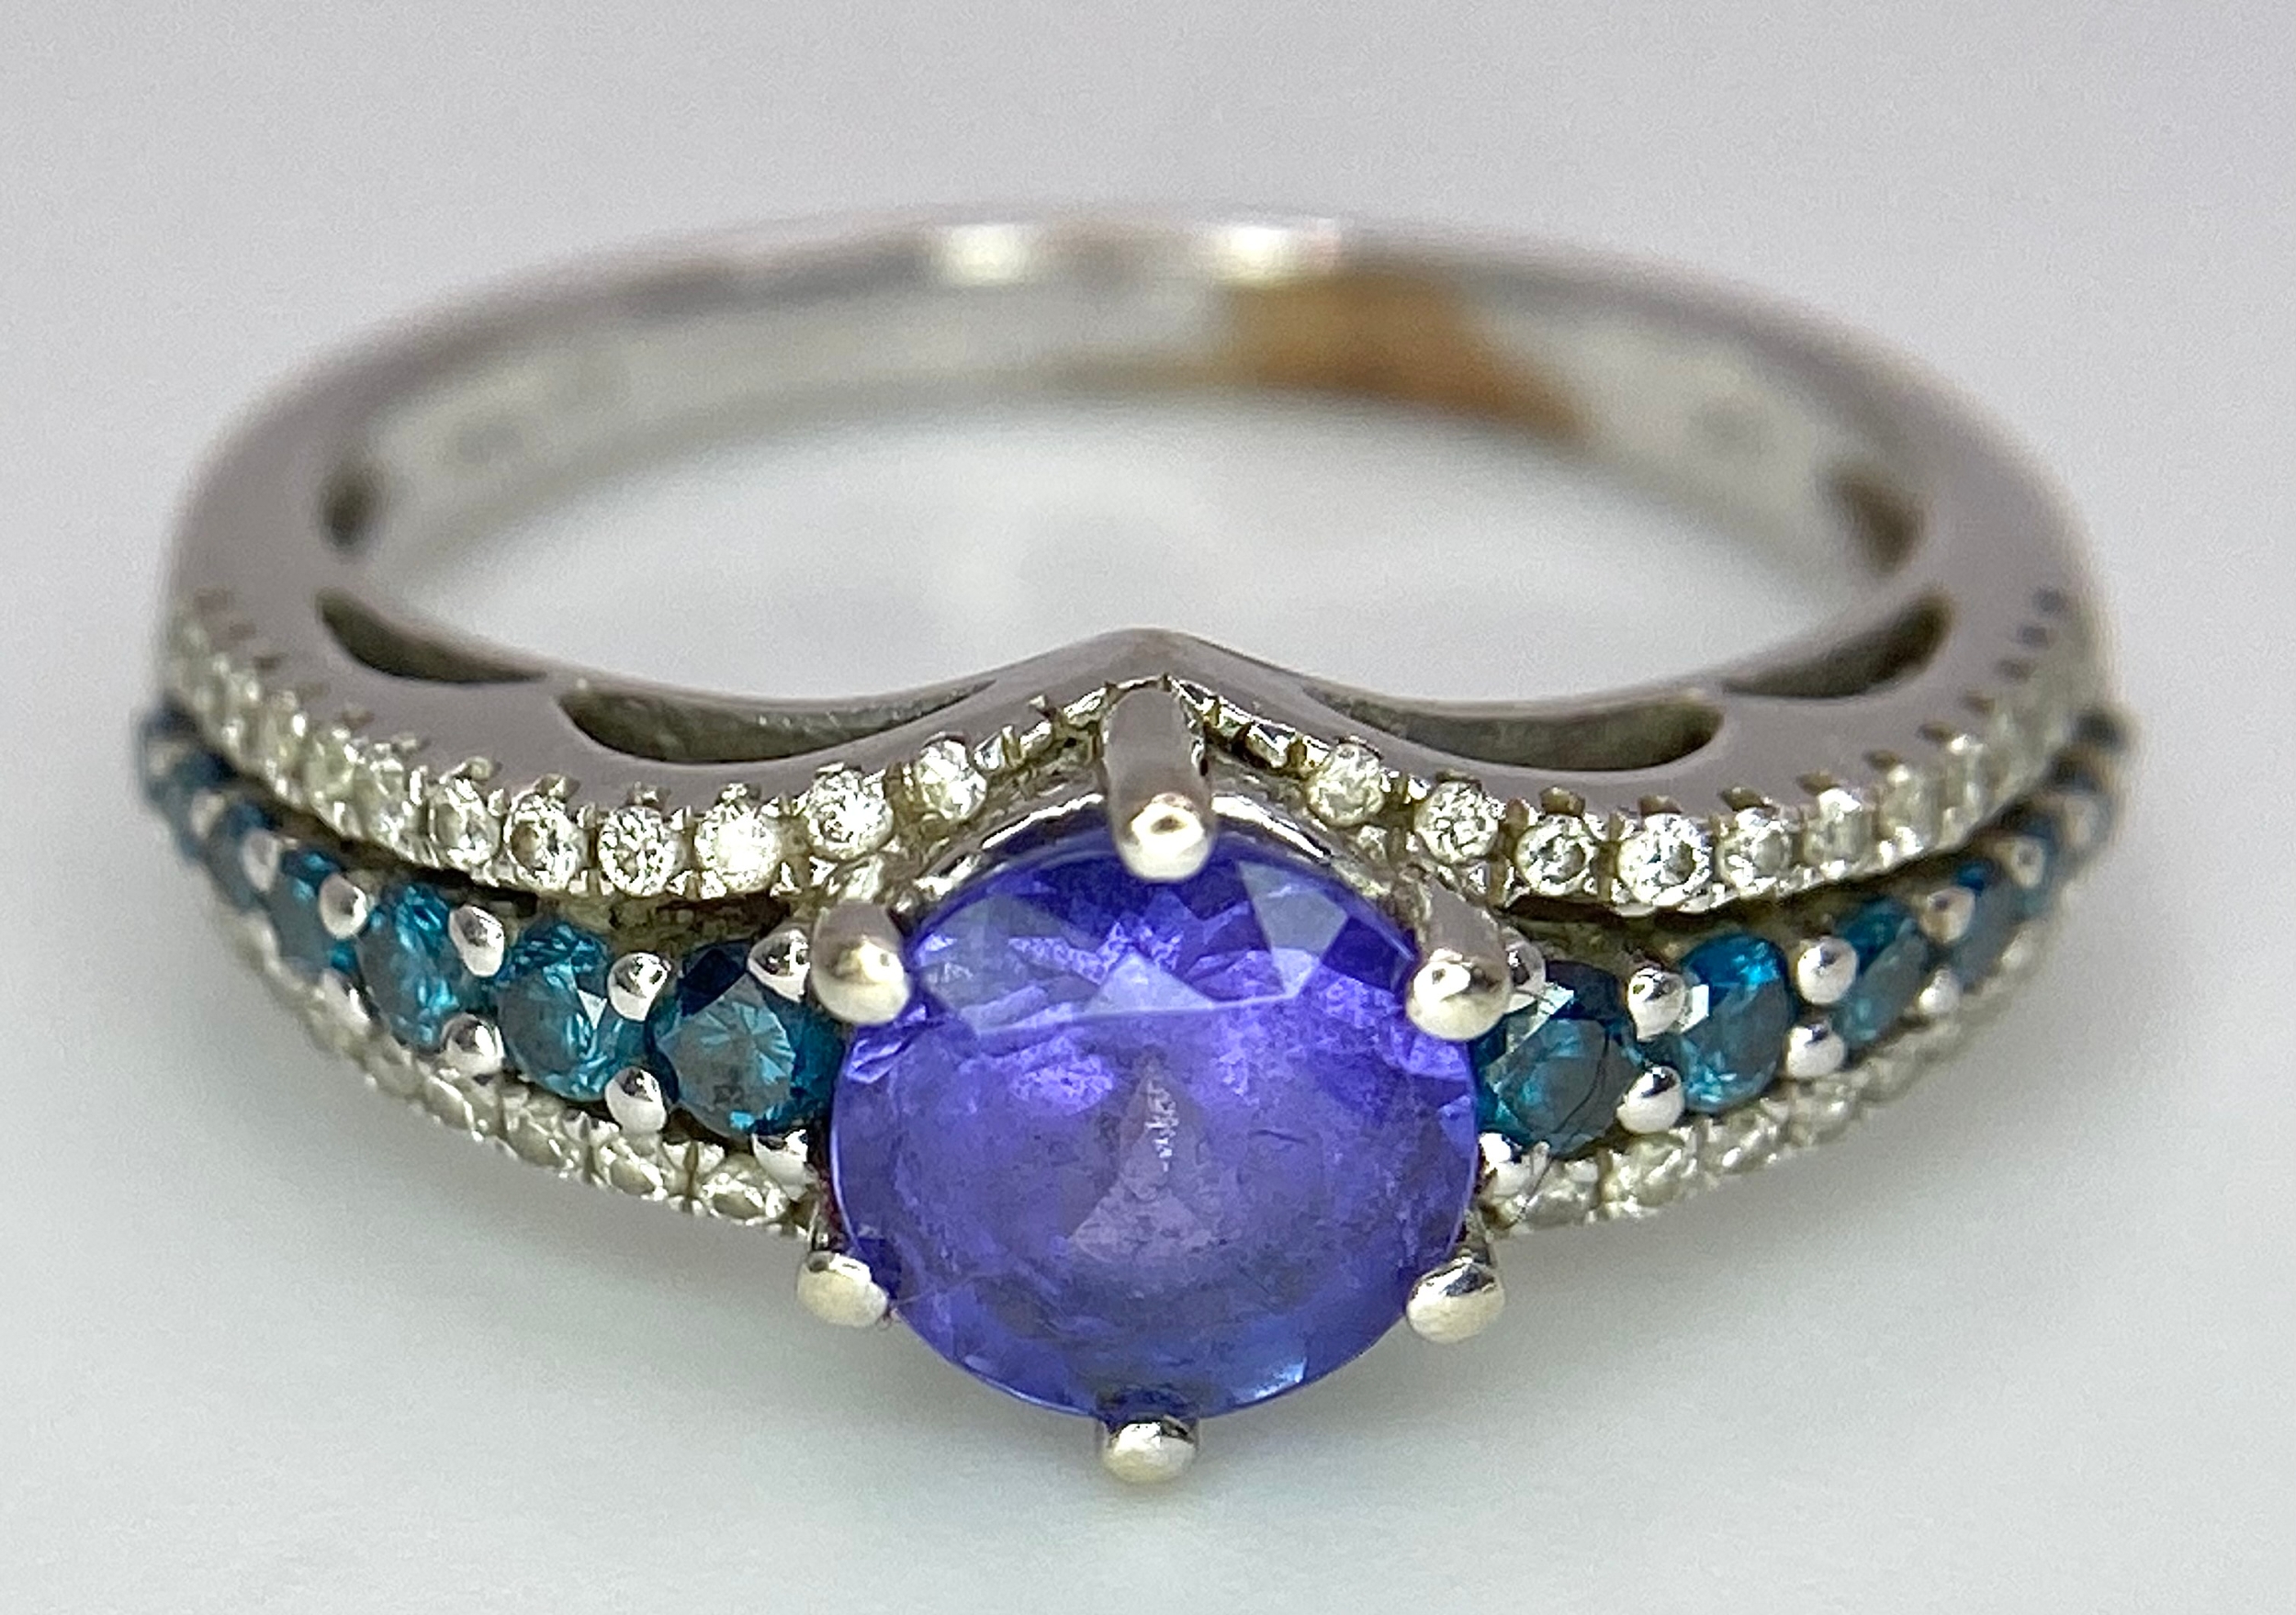 A 14K White Gold Tanzanite and Diamond Ring. Central oval cut tanzanite with blue and white diamonds